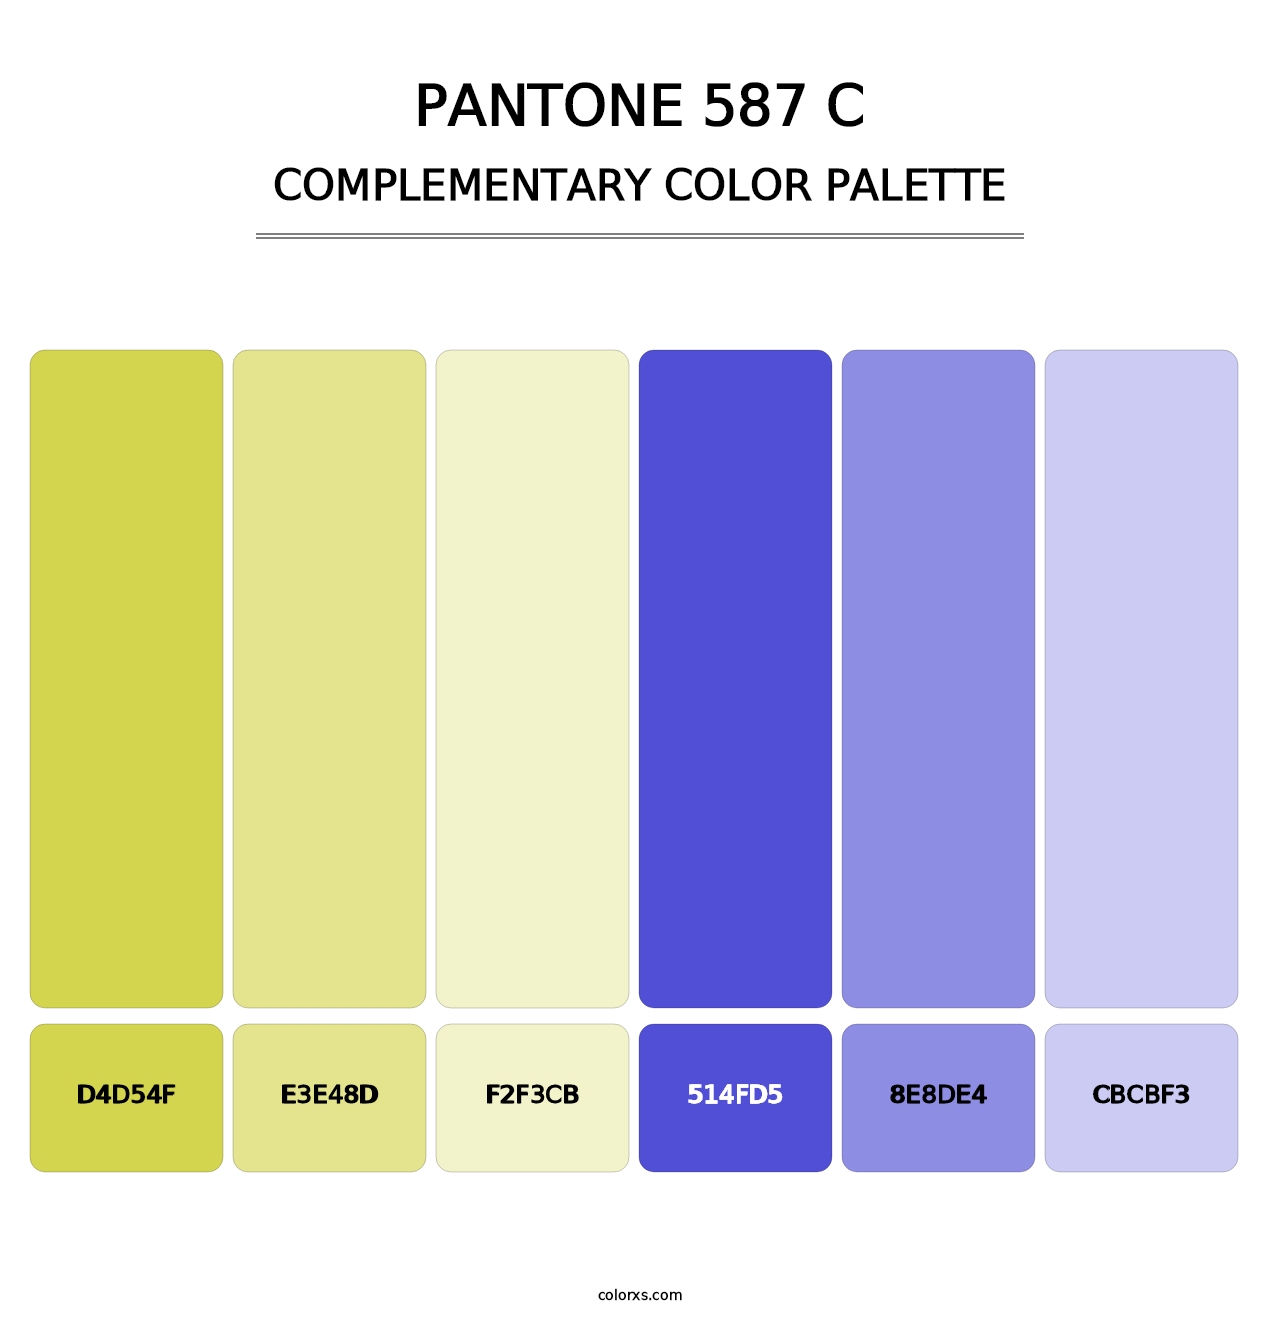 PANTONE 587 C - Complementary Color Palette